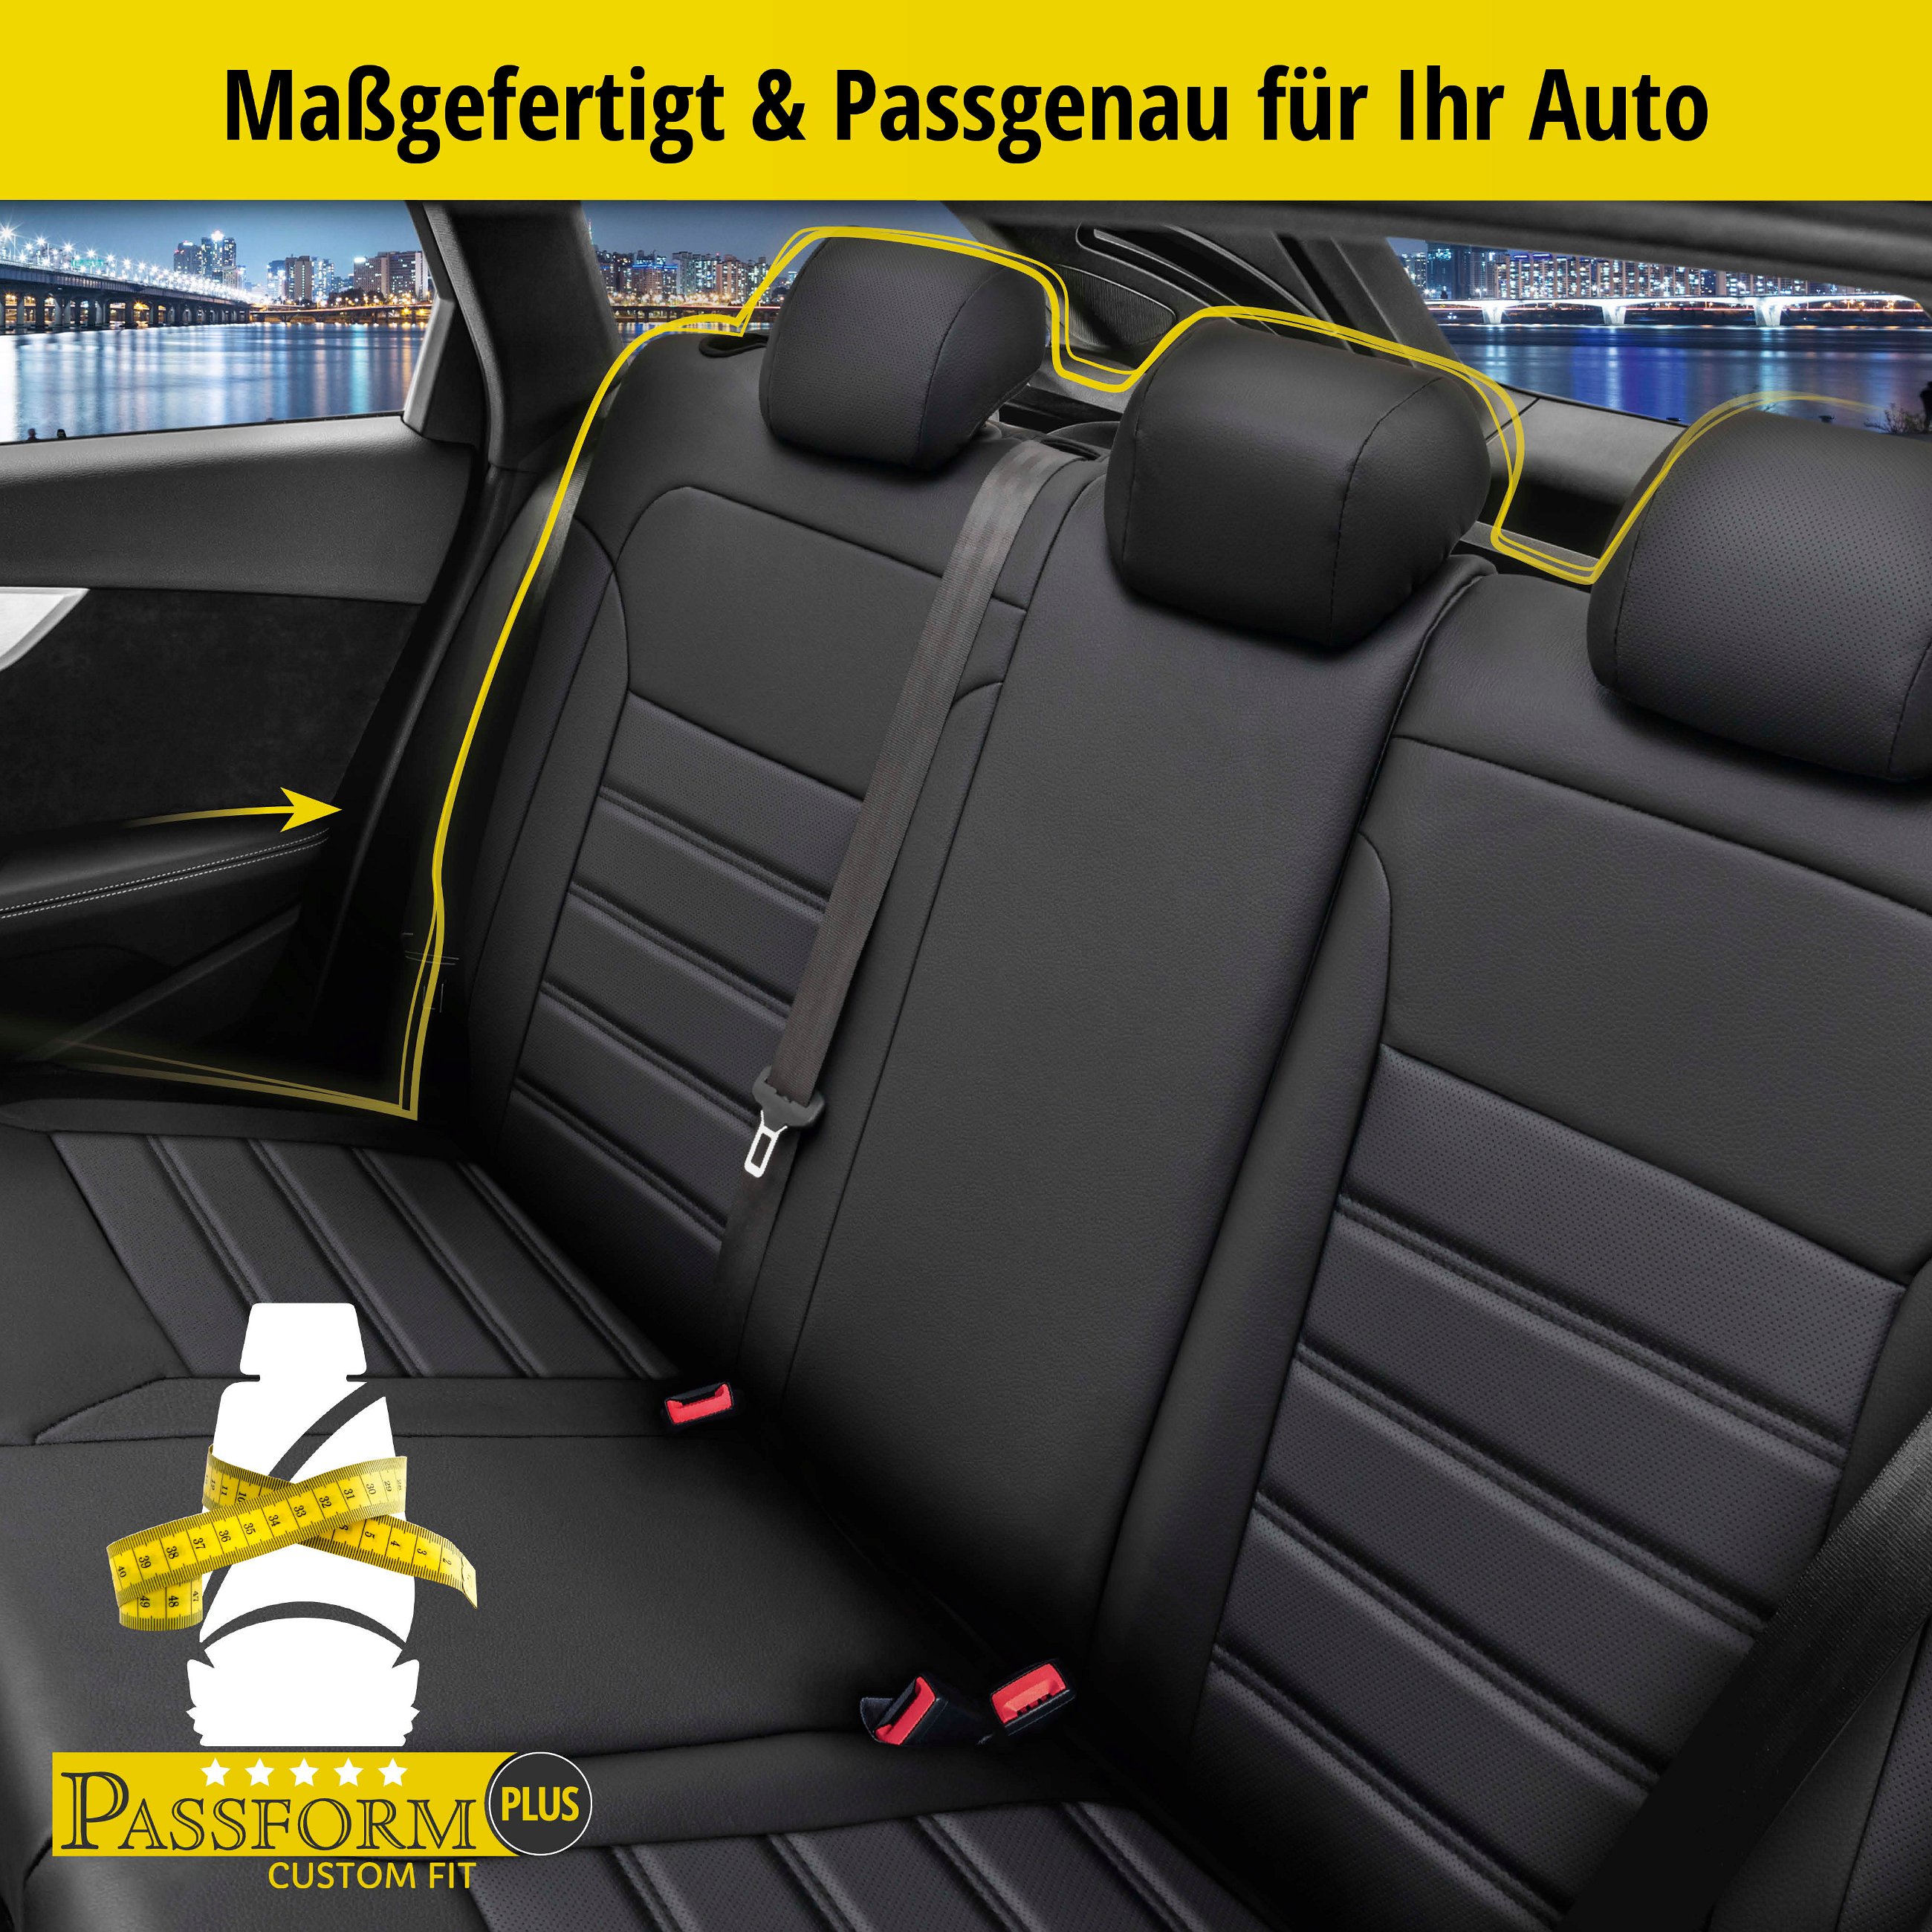 Passform Sitzbezug Robusto für Mercedes C-Klasse 07/2013-Heute, 1 Rücksitzbankbezug für Normalsitze